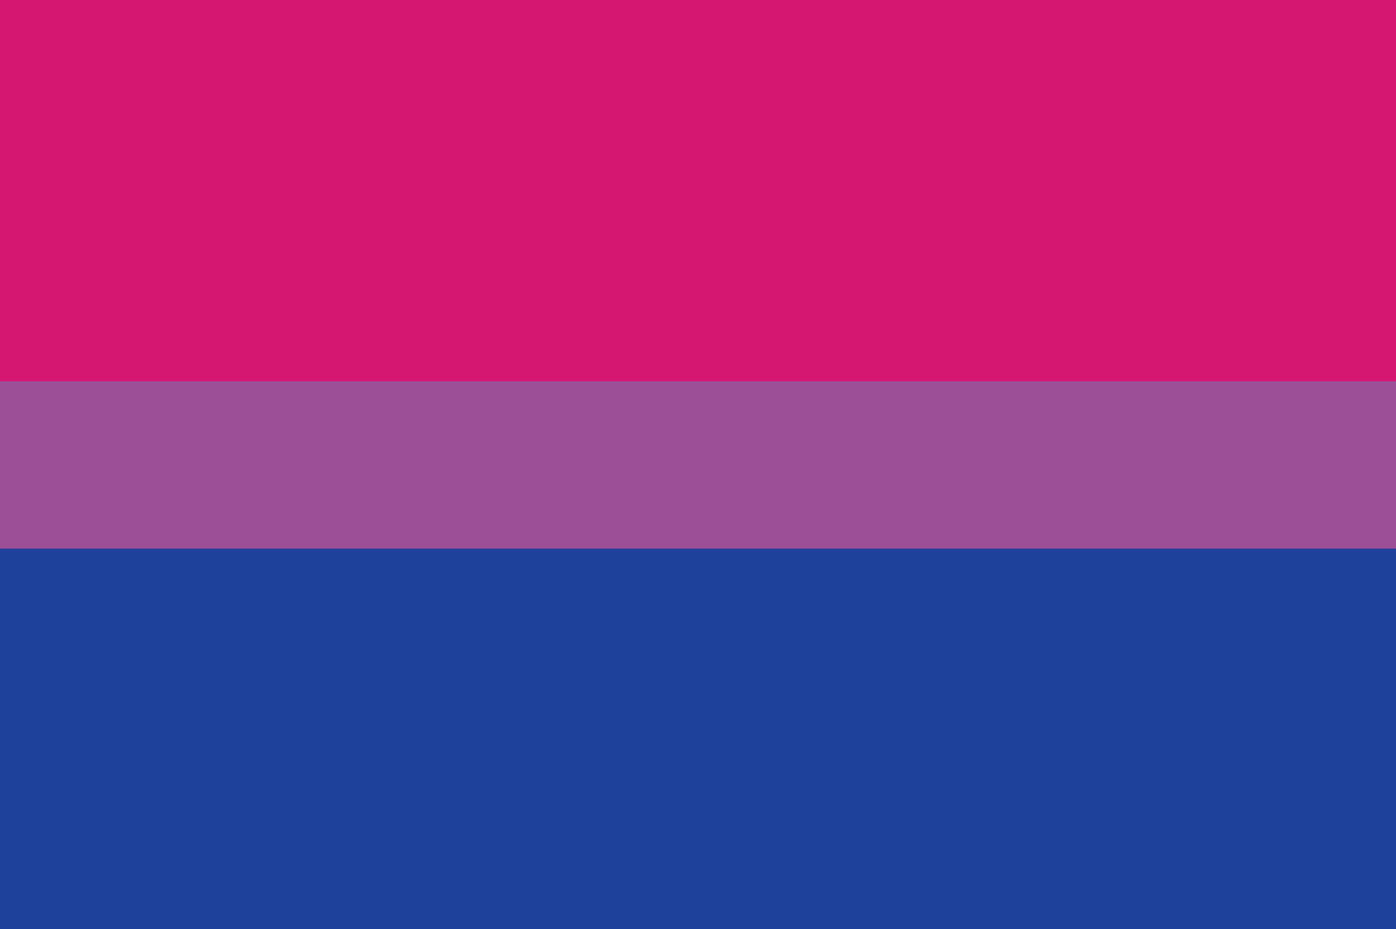 Opinion Bisexual Erasure Persists Through Pride Month